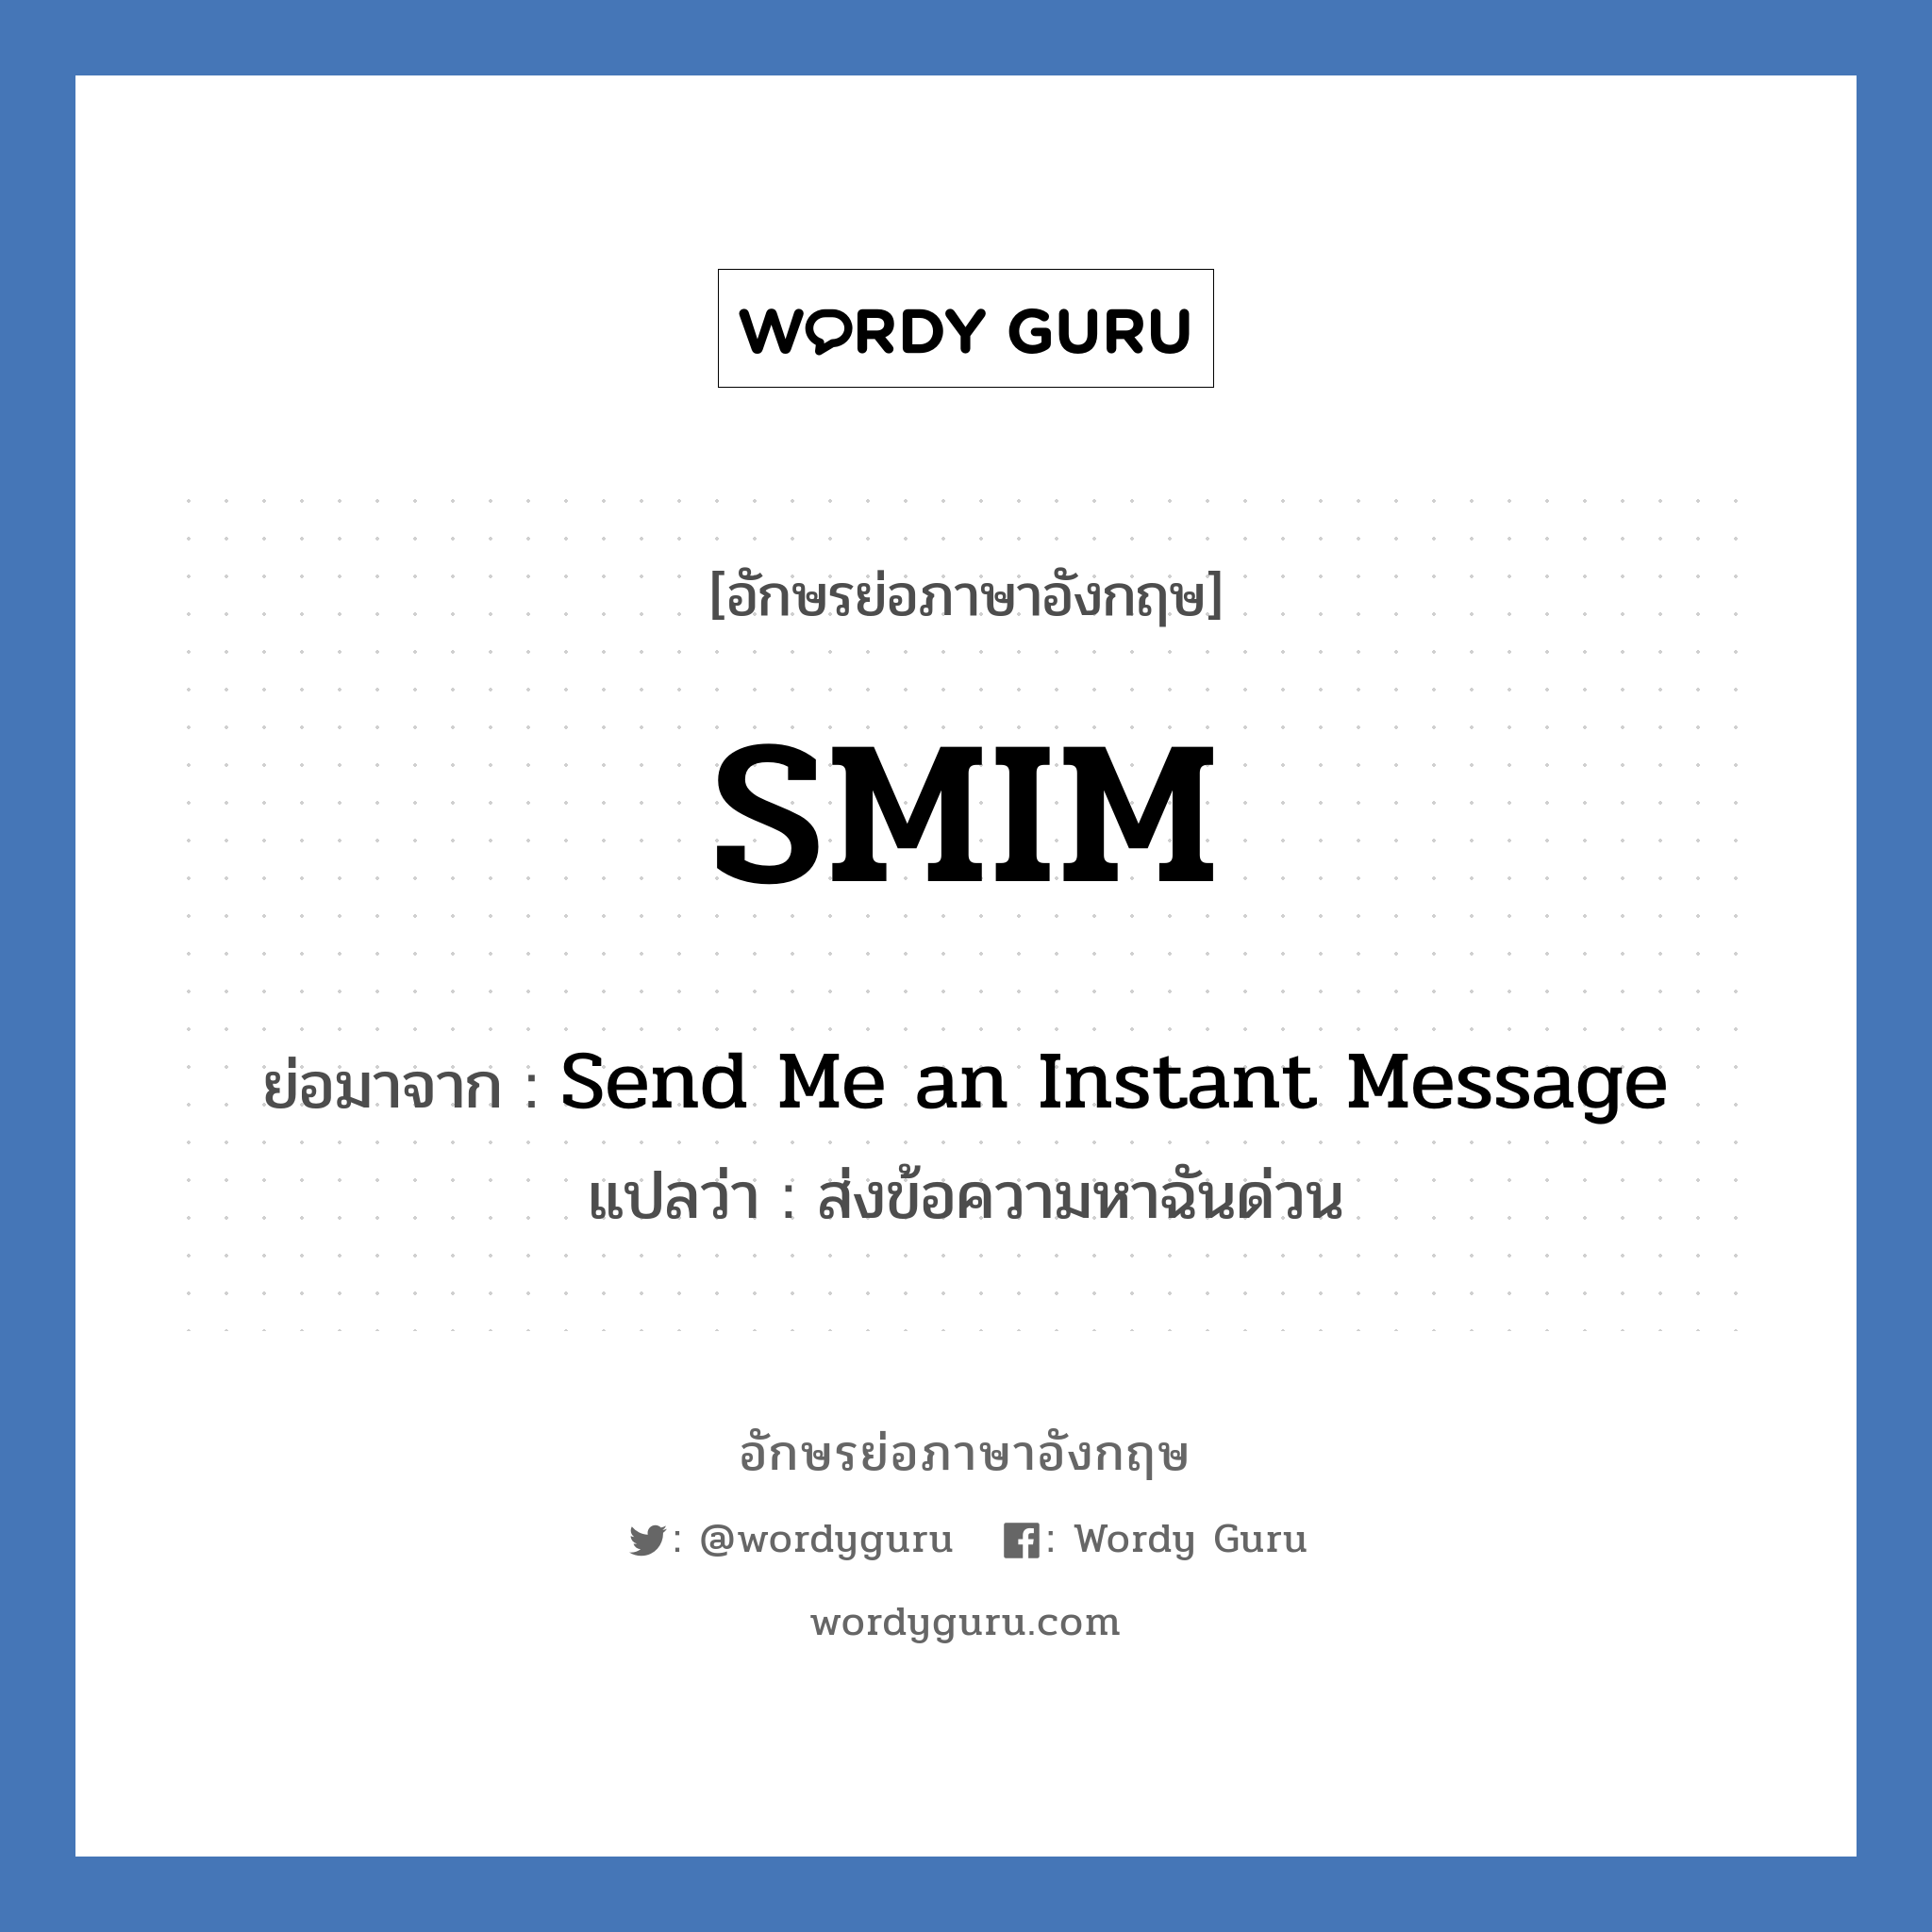 SMIM ย่อมาจาก? แปลว่า?, อักษรย่อภาษาอังกฤษ SMIM ย่อมาจาก Send Me an Instant Message แปลว่า ส่งข้อความหาฉันด่วน